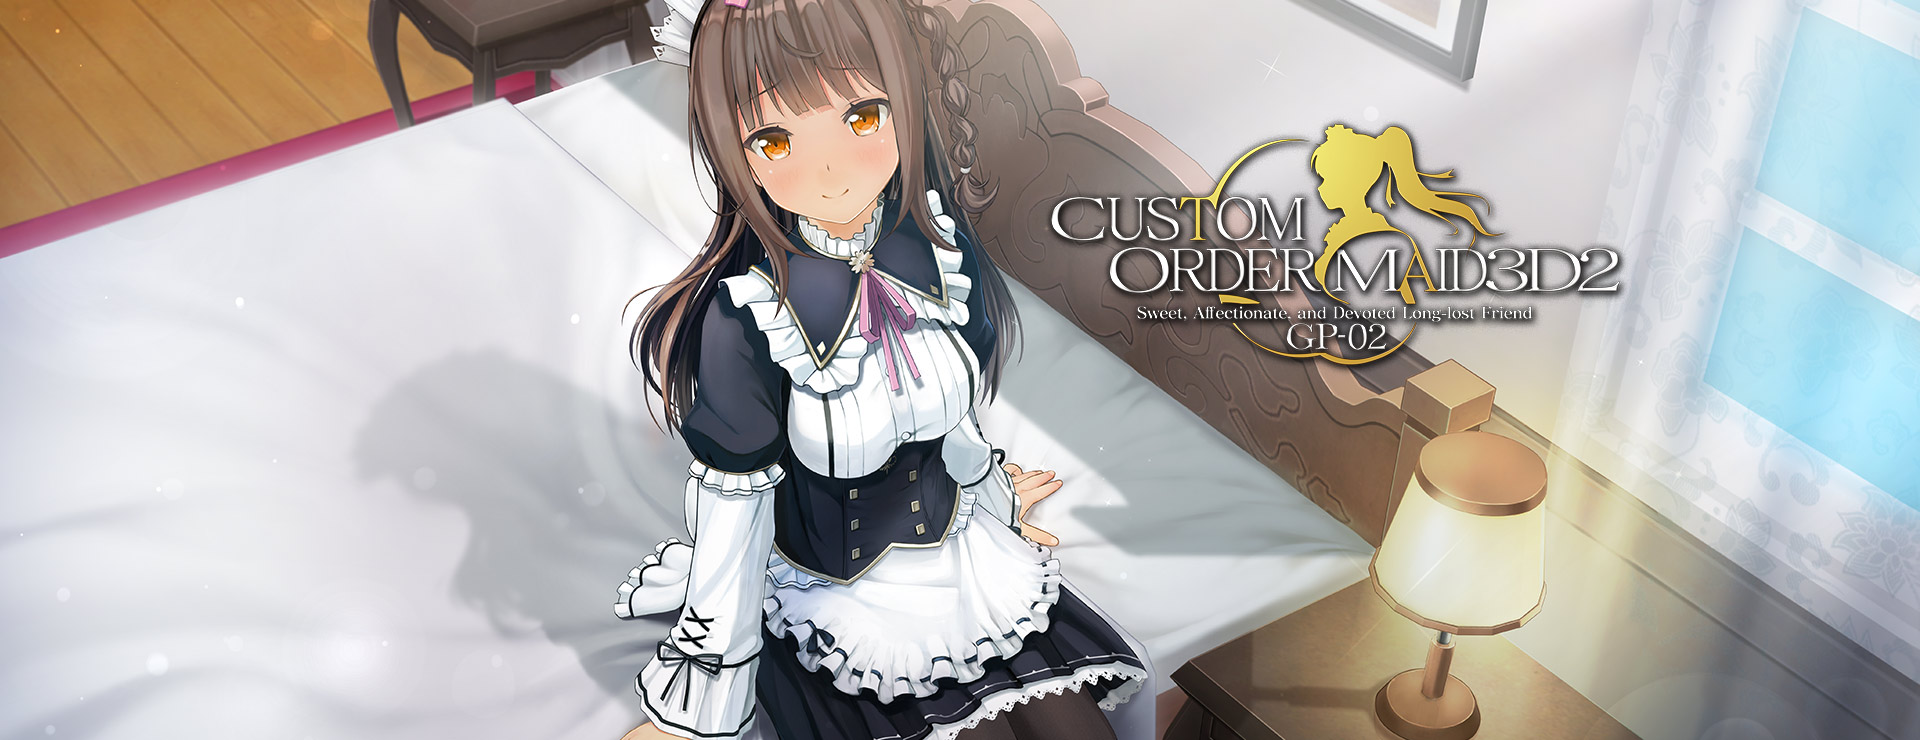 Custom Order Maid 3D 2: Sweet, Affectionate, and Devoted Long-lost Friend GP02 - シミュレーション ゲーム